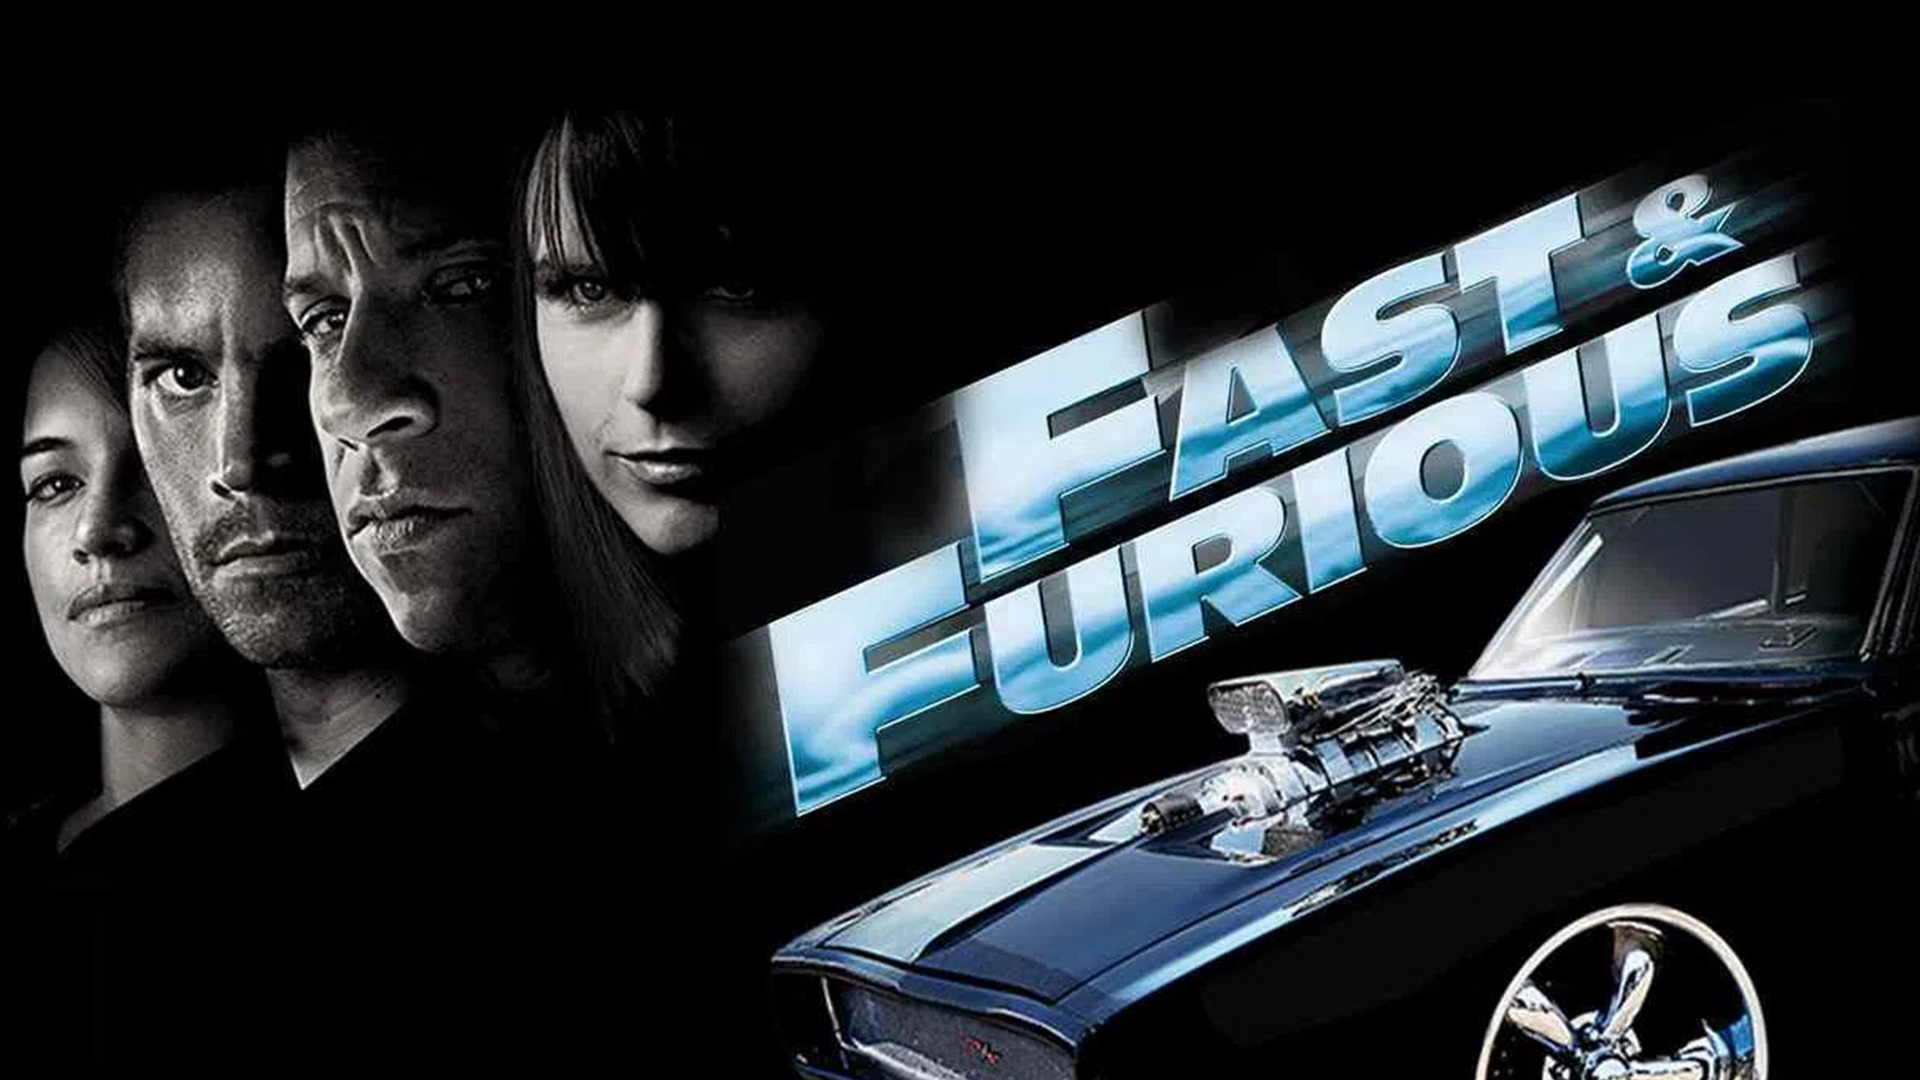 Fast & Furious 4